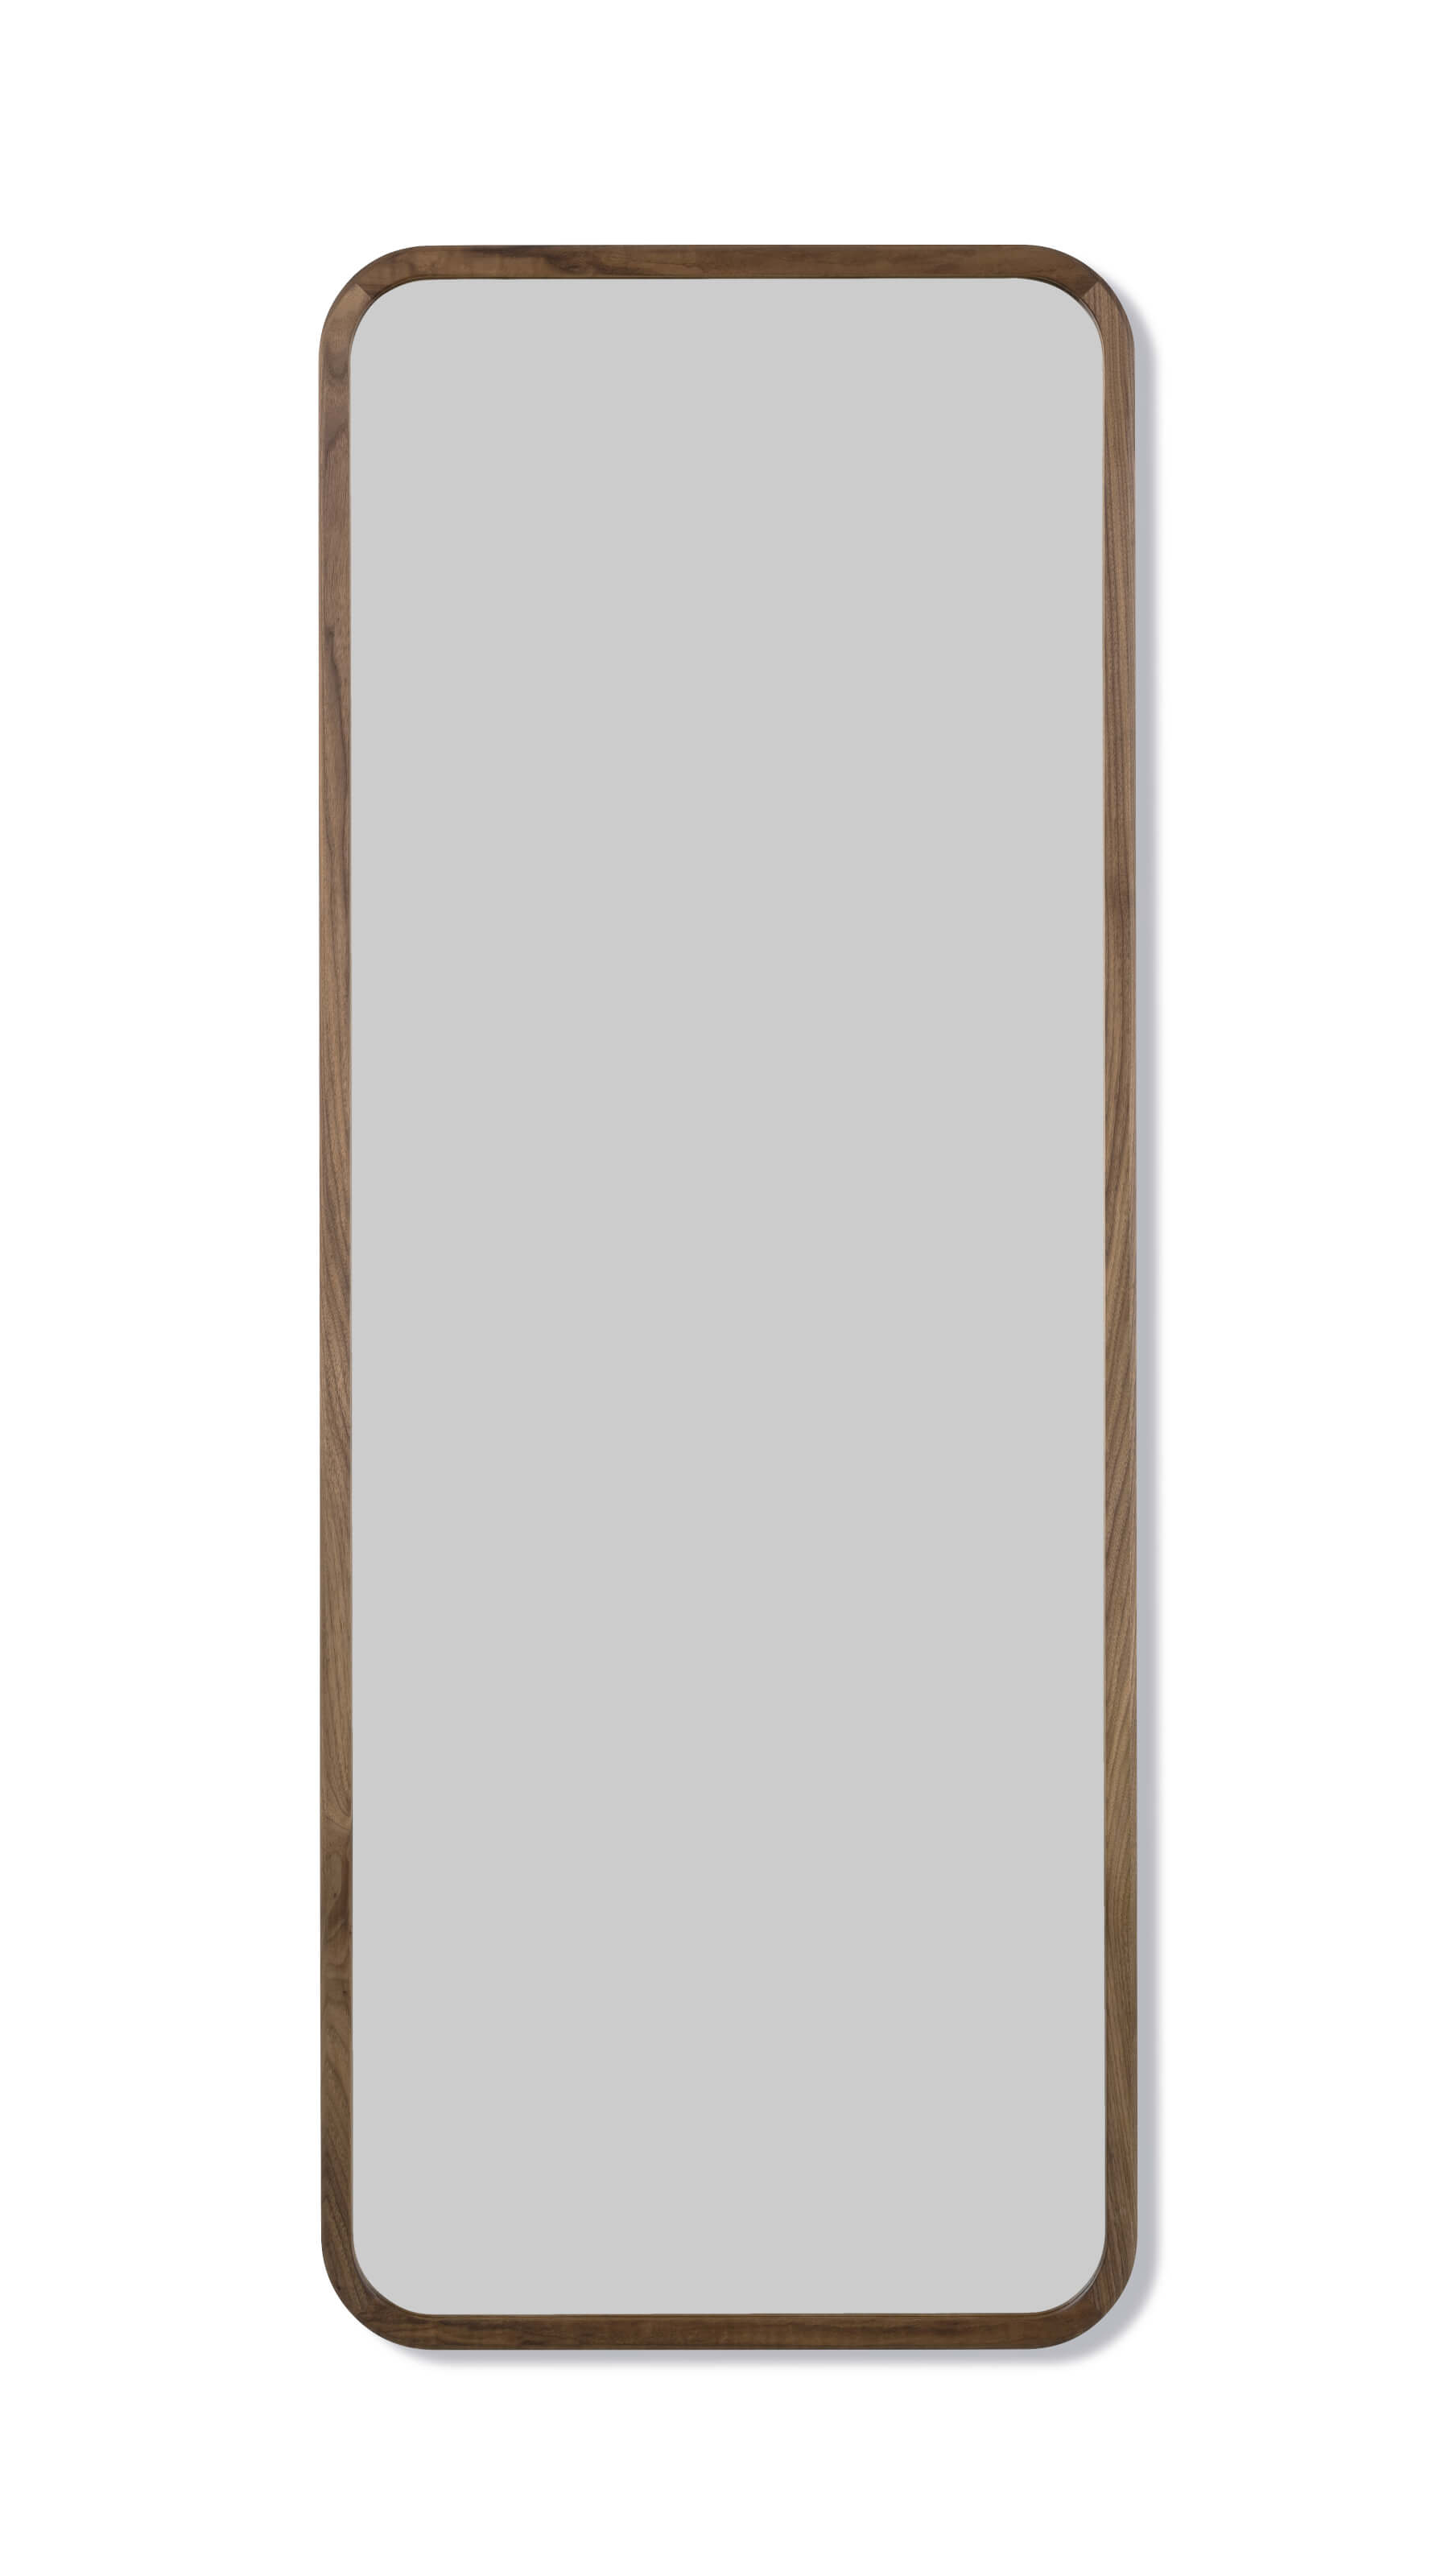 Silhouette Spiegel, 70 x  180 cm, walnuss geölt